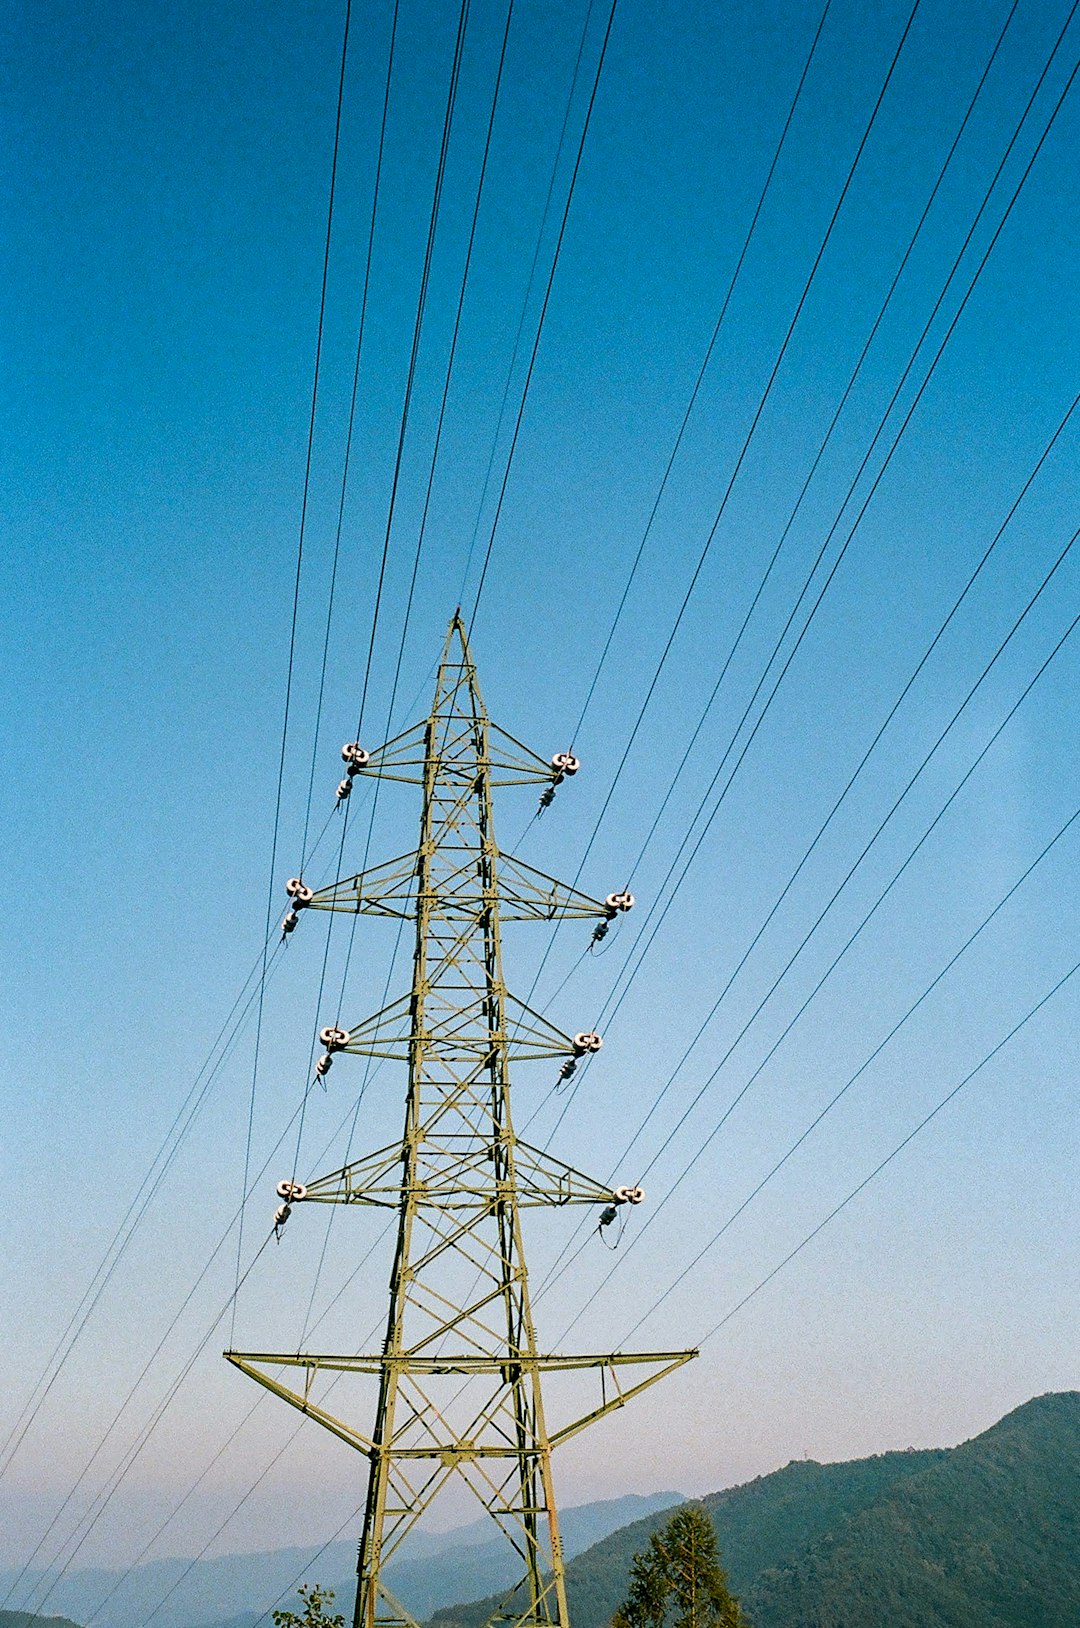 black electric post under blue sky during daytime